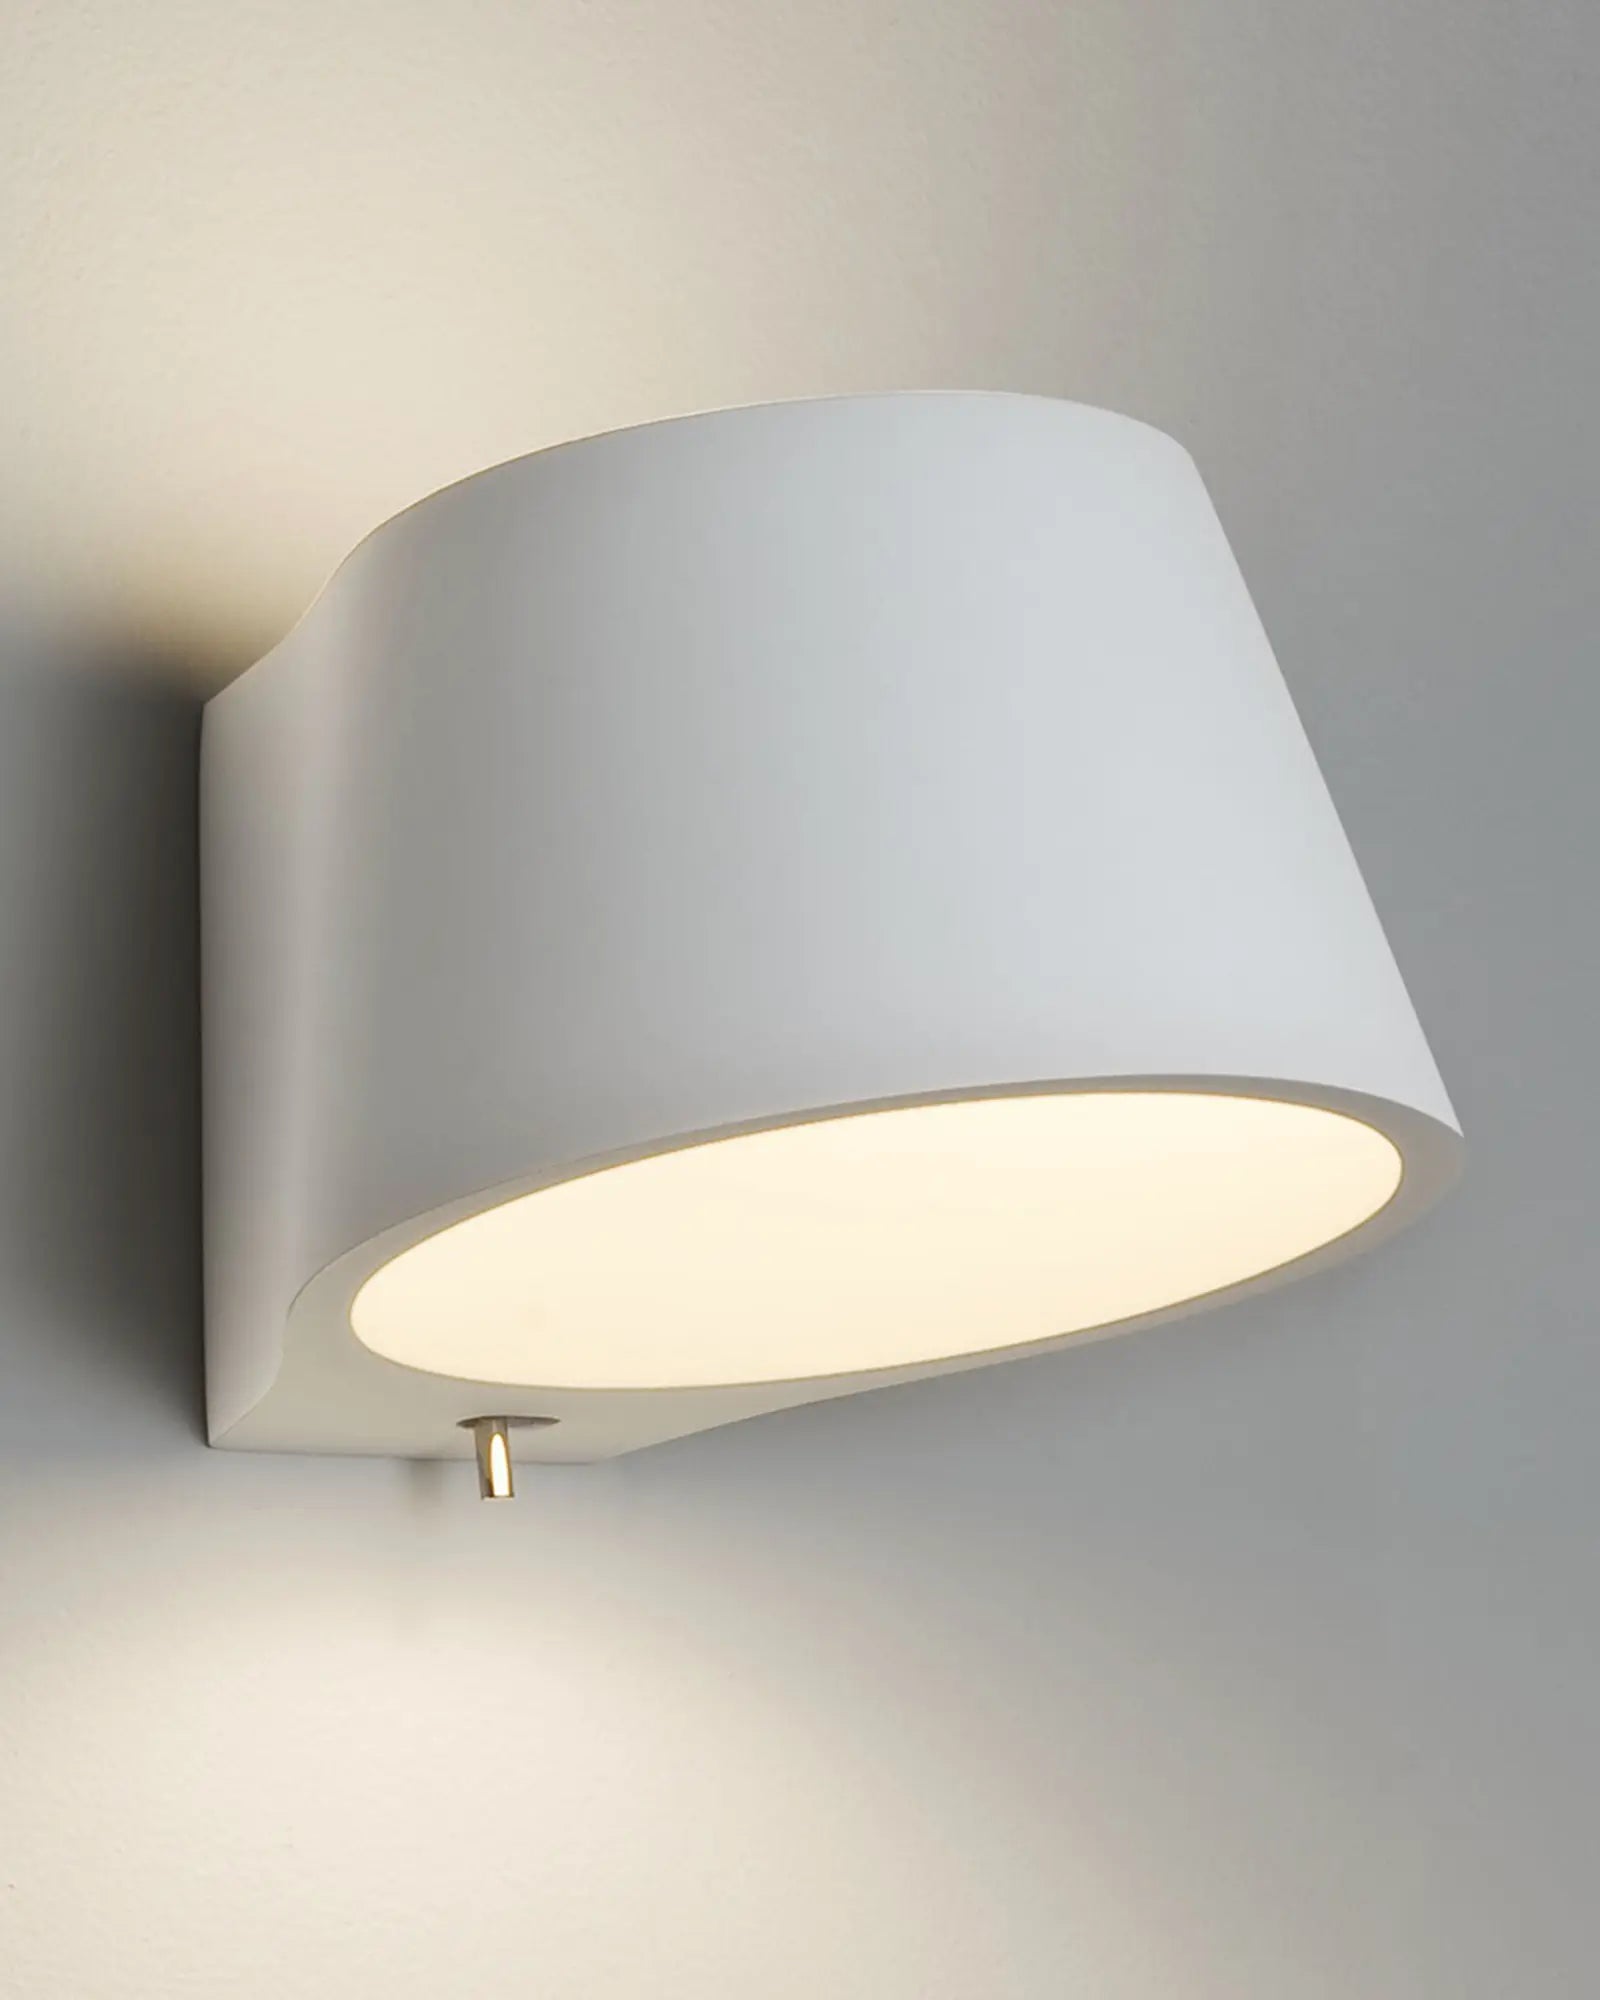 Koza plaster minimalistic contemporary wall light with switch